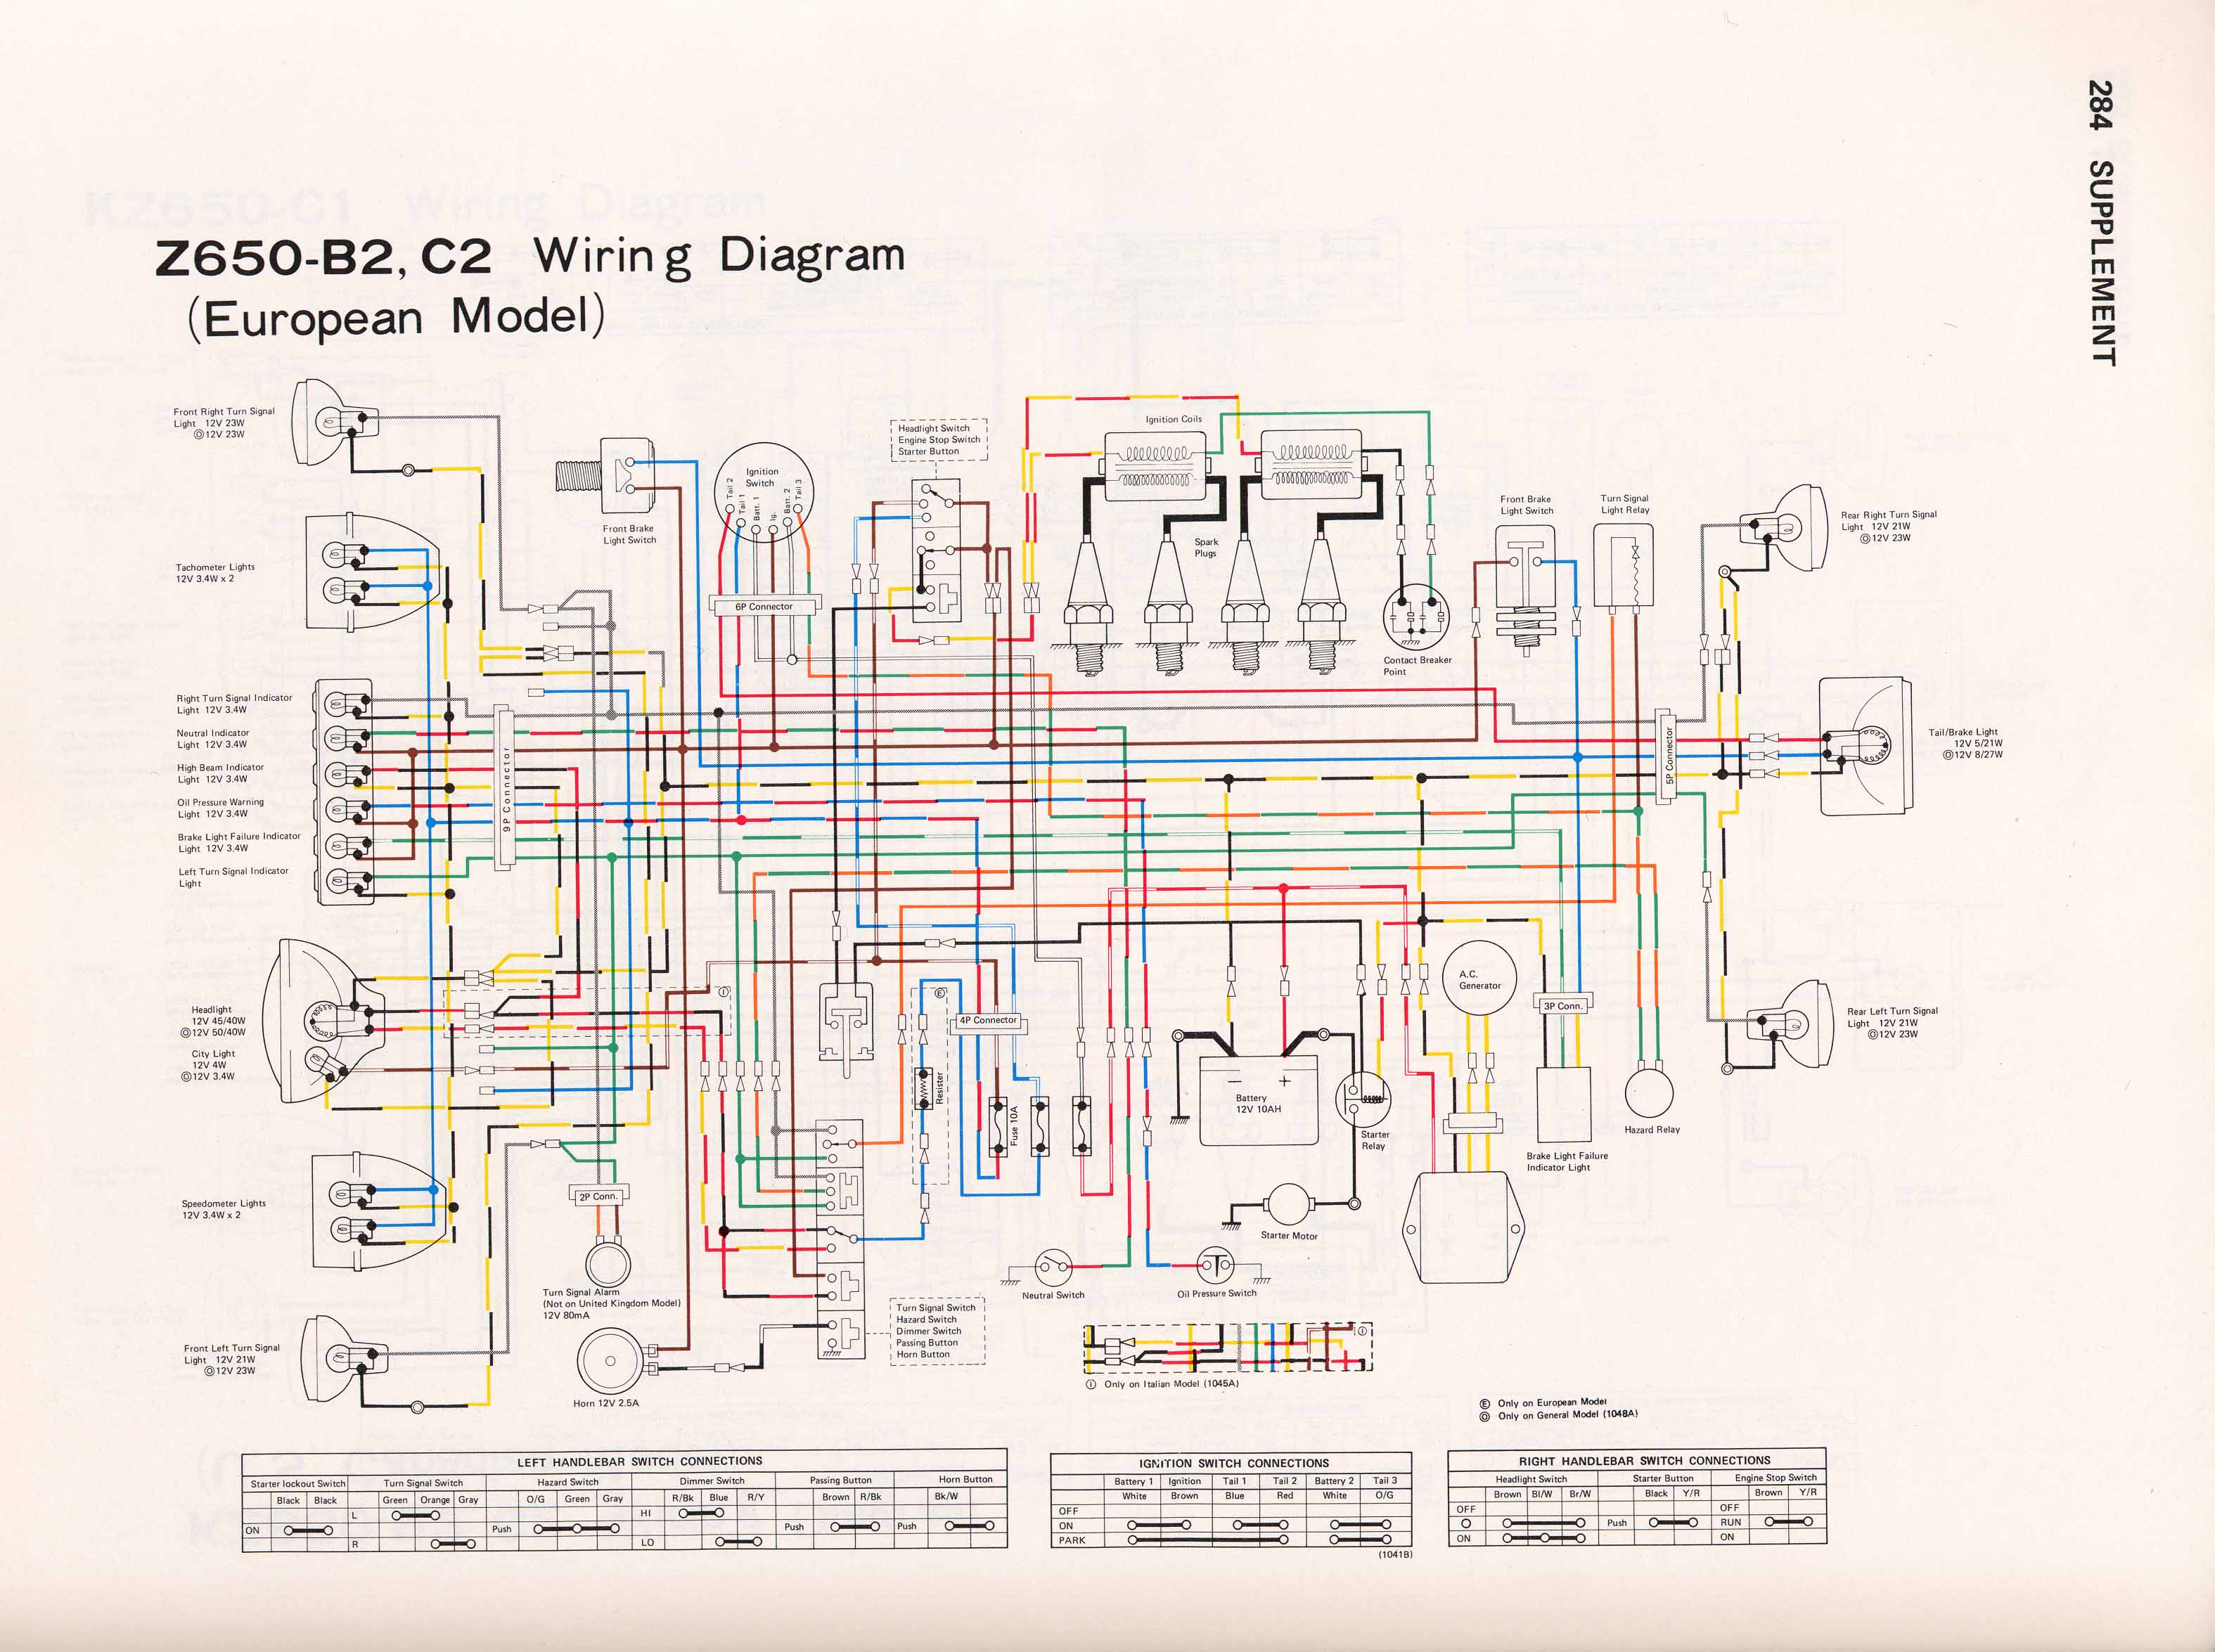 1981 kawasaki kz650 wiring diagram